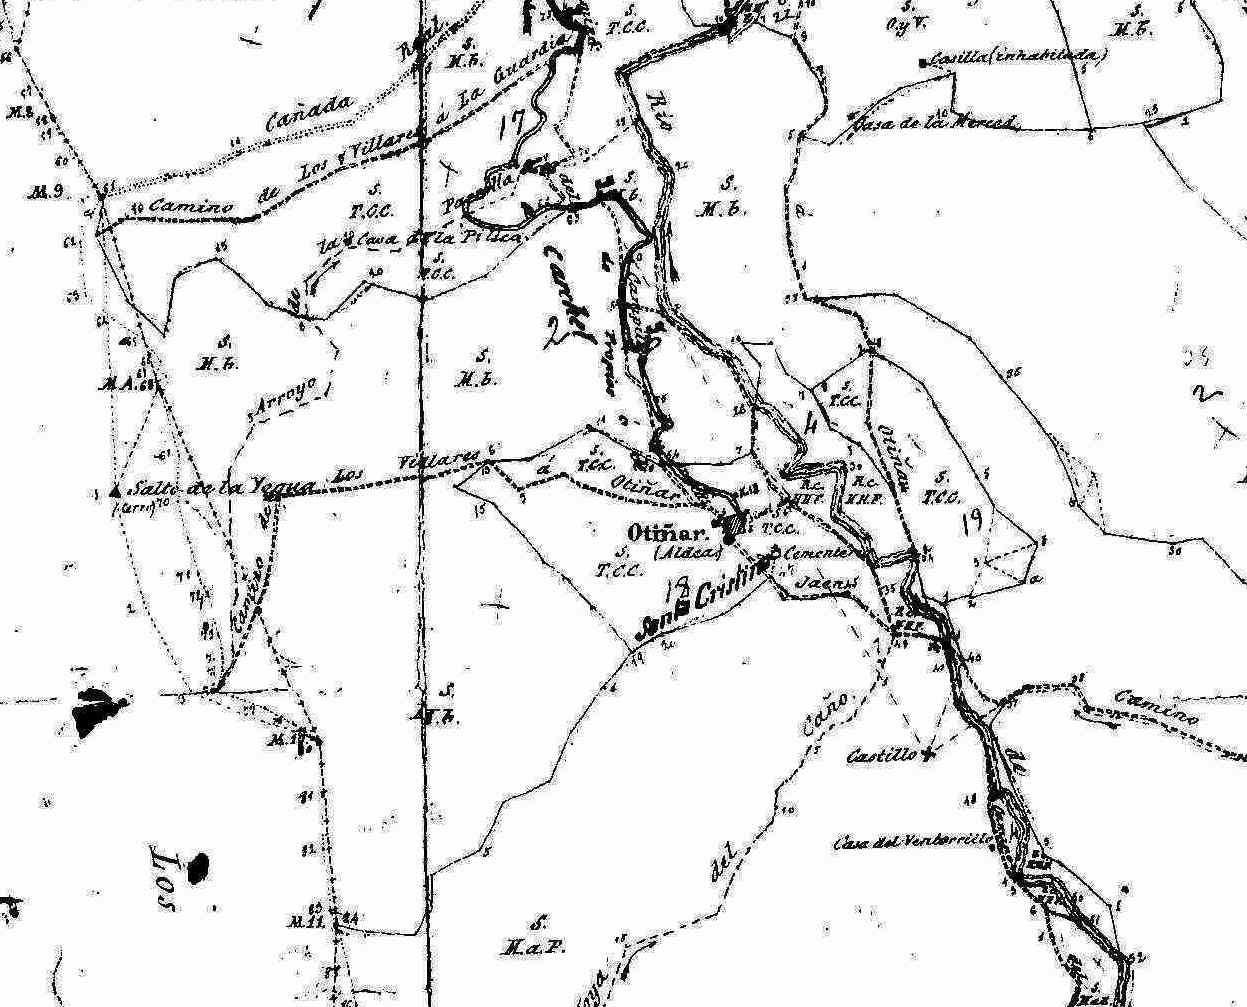 Aldea de Santa Cristina u Otiar - Aldea de Santa Cristina u Otiar. Mapa 1878